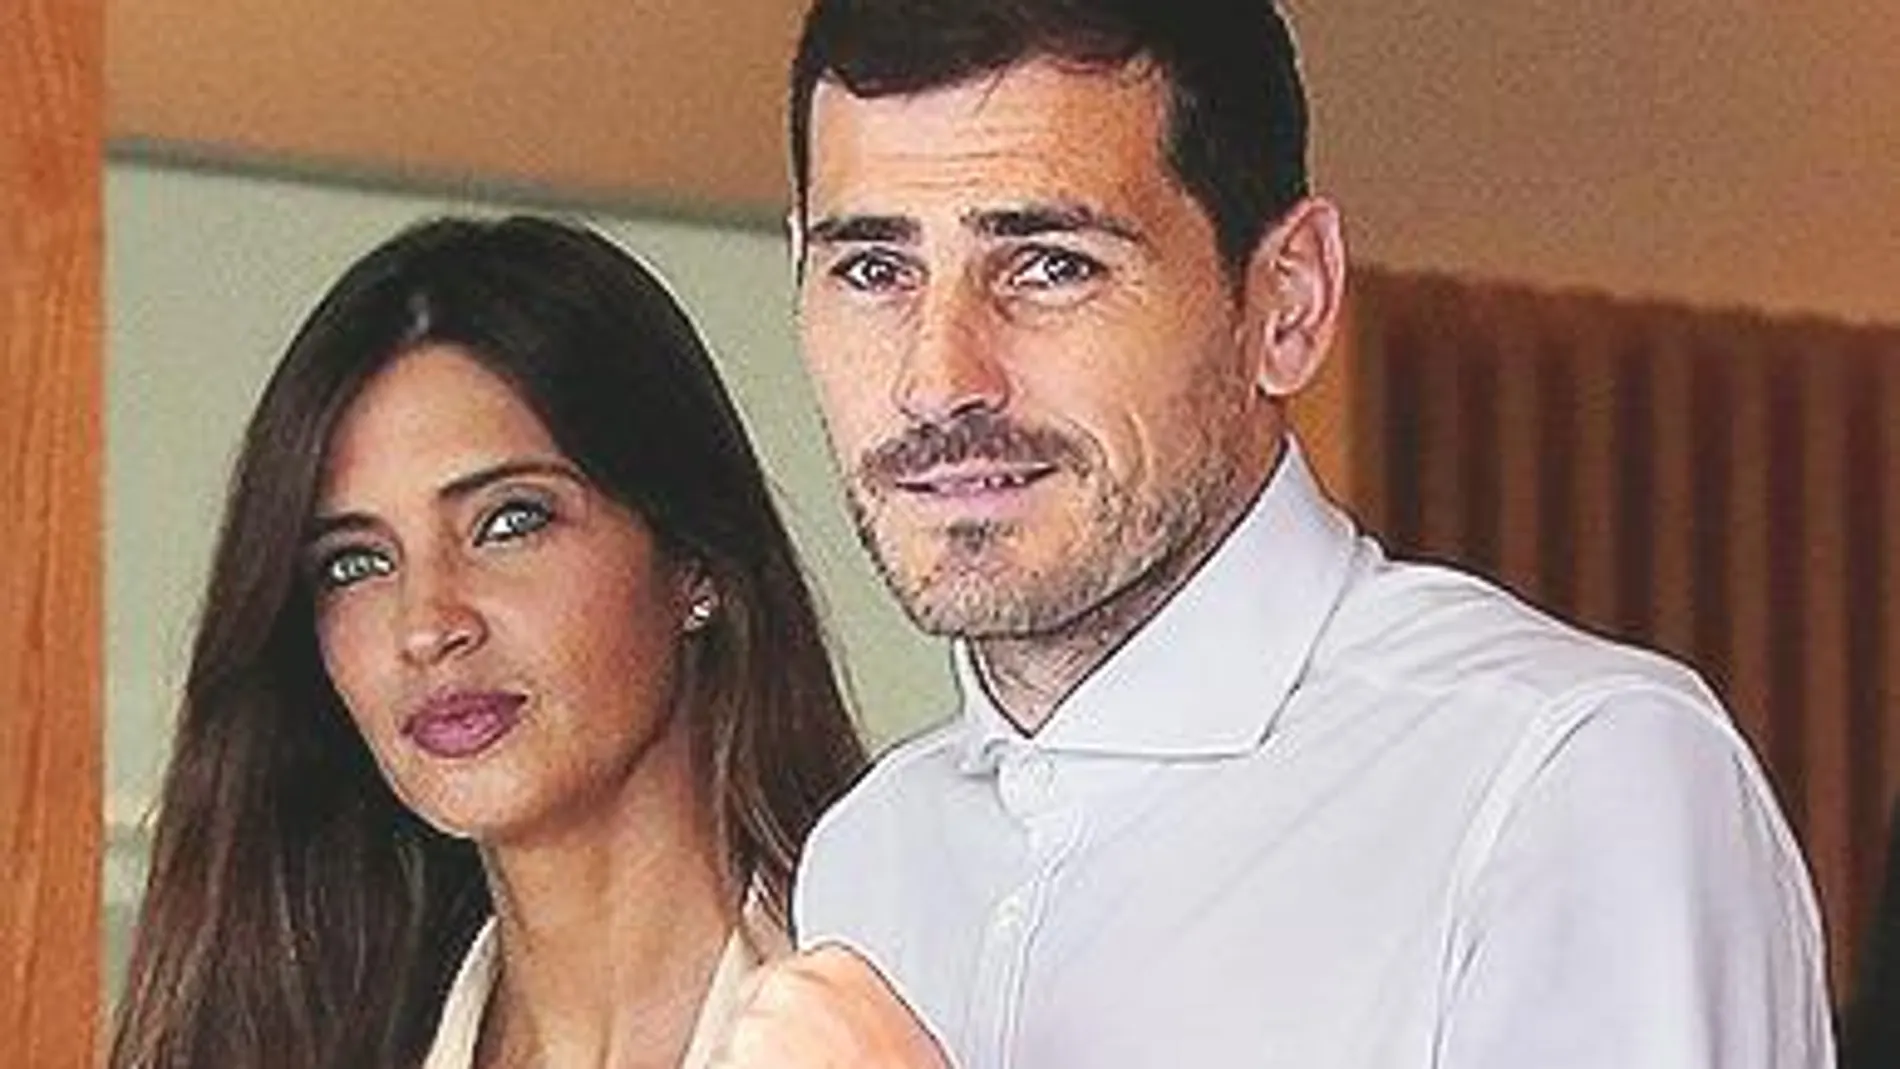 Sara Carbonero e Iker Casillas a su salida del Hospital